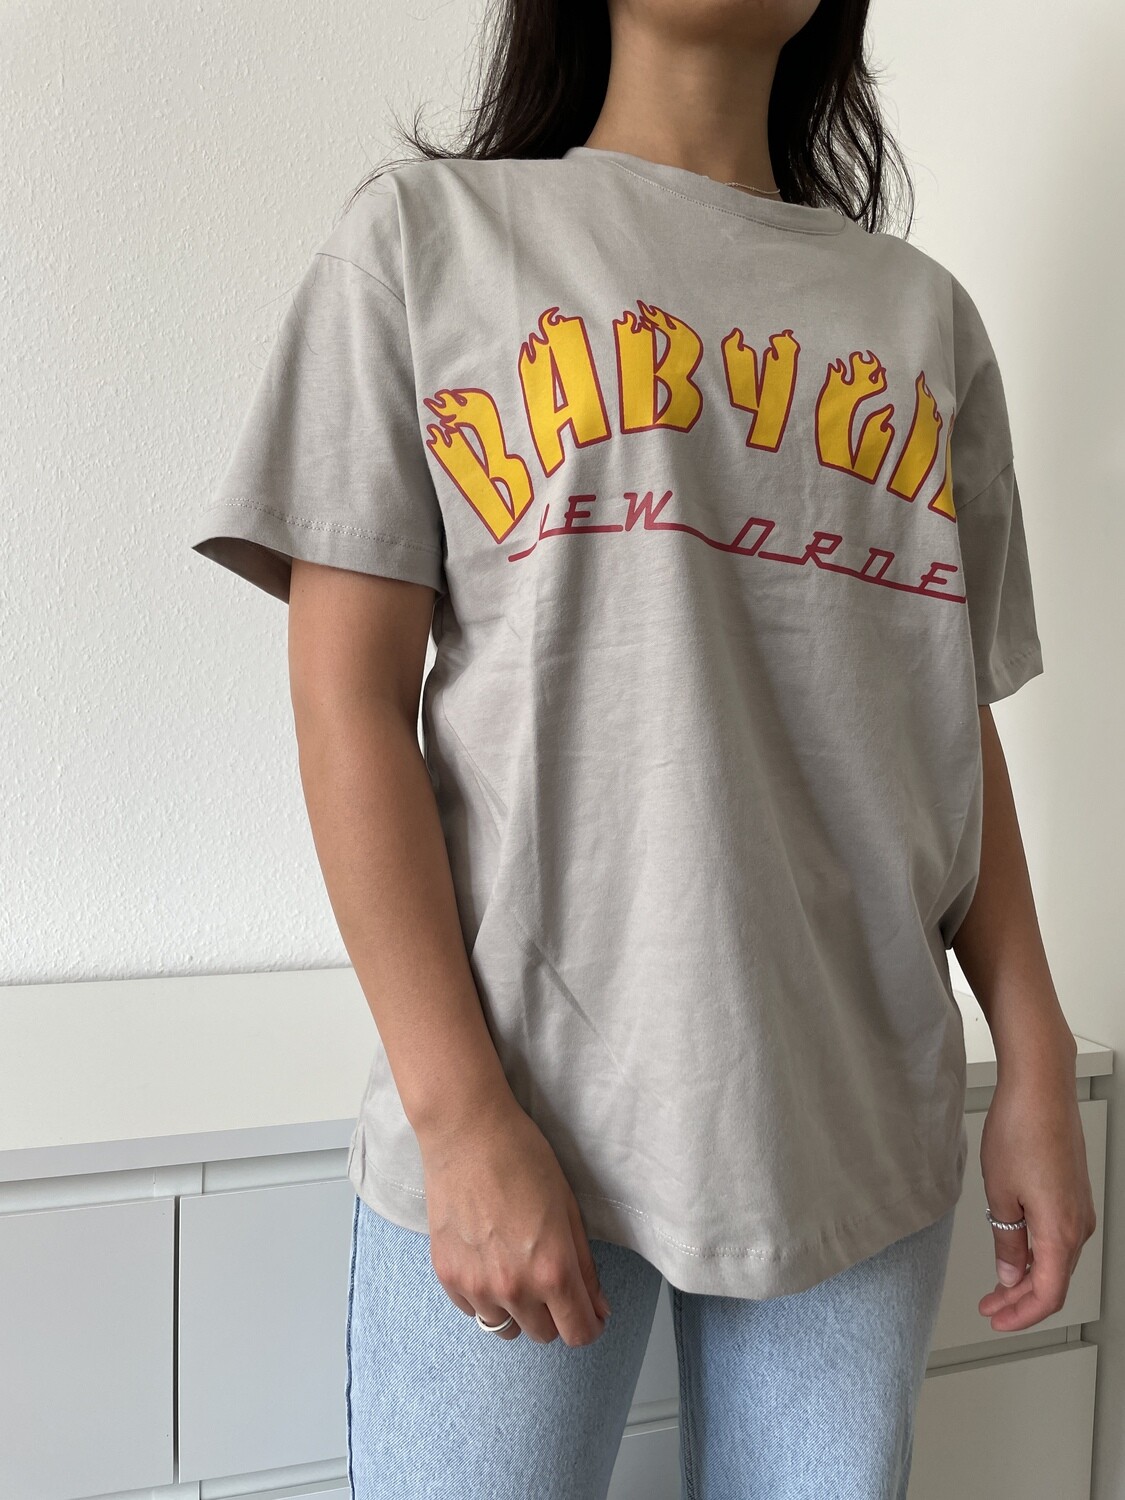 Babygirl Shirt S